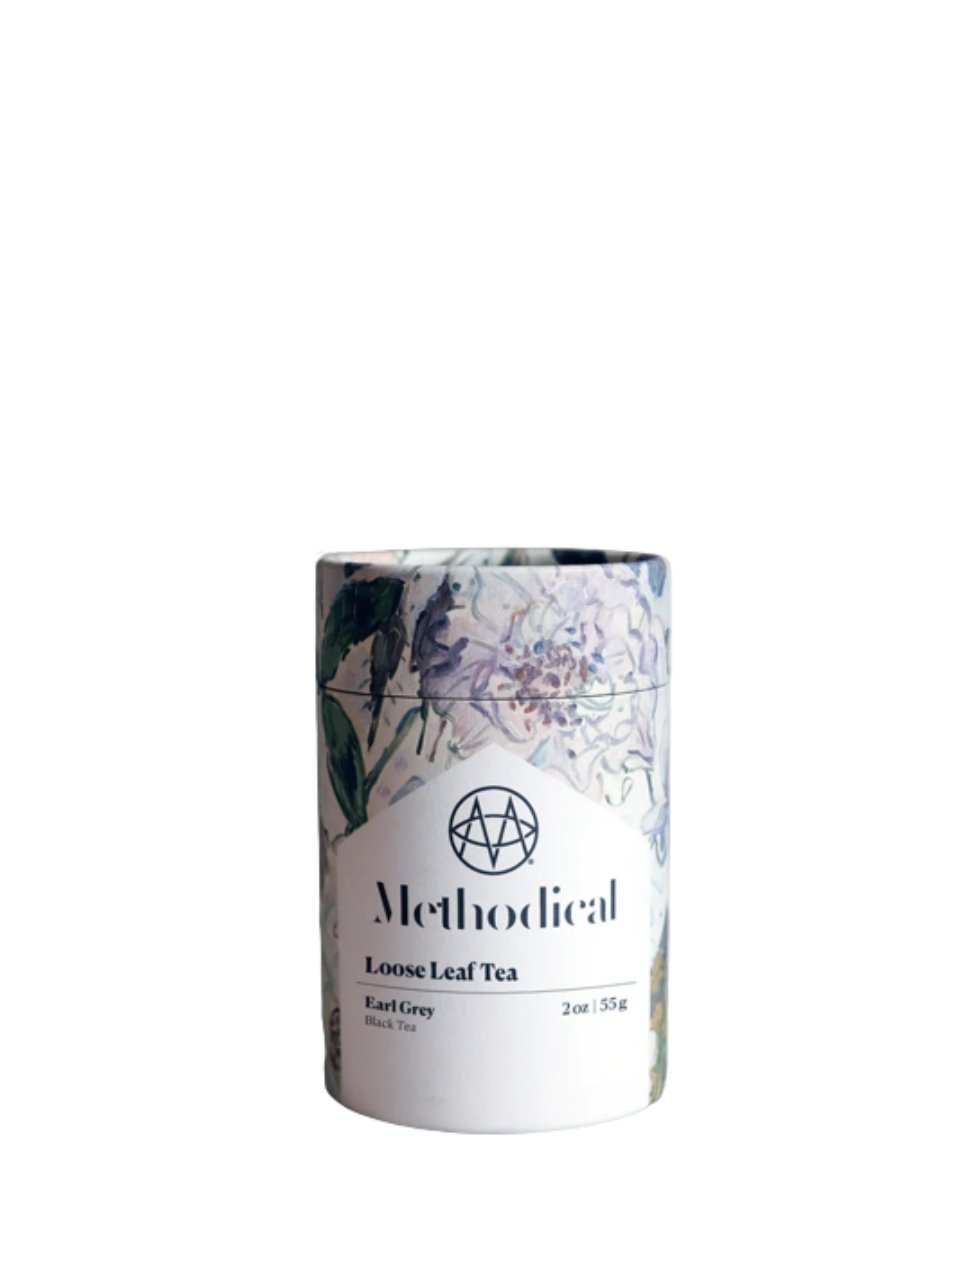 Methodical Loose Leaf Tea- Earl Grey